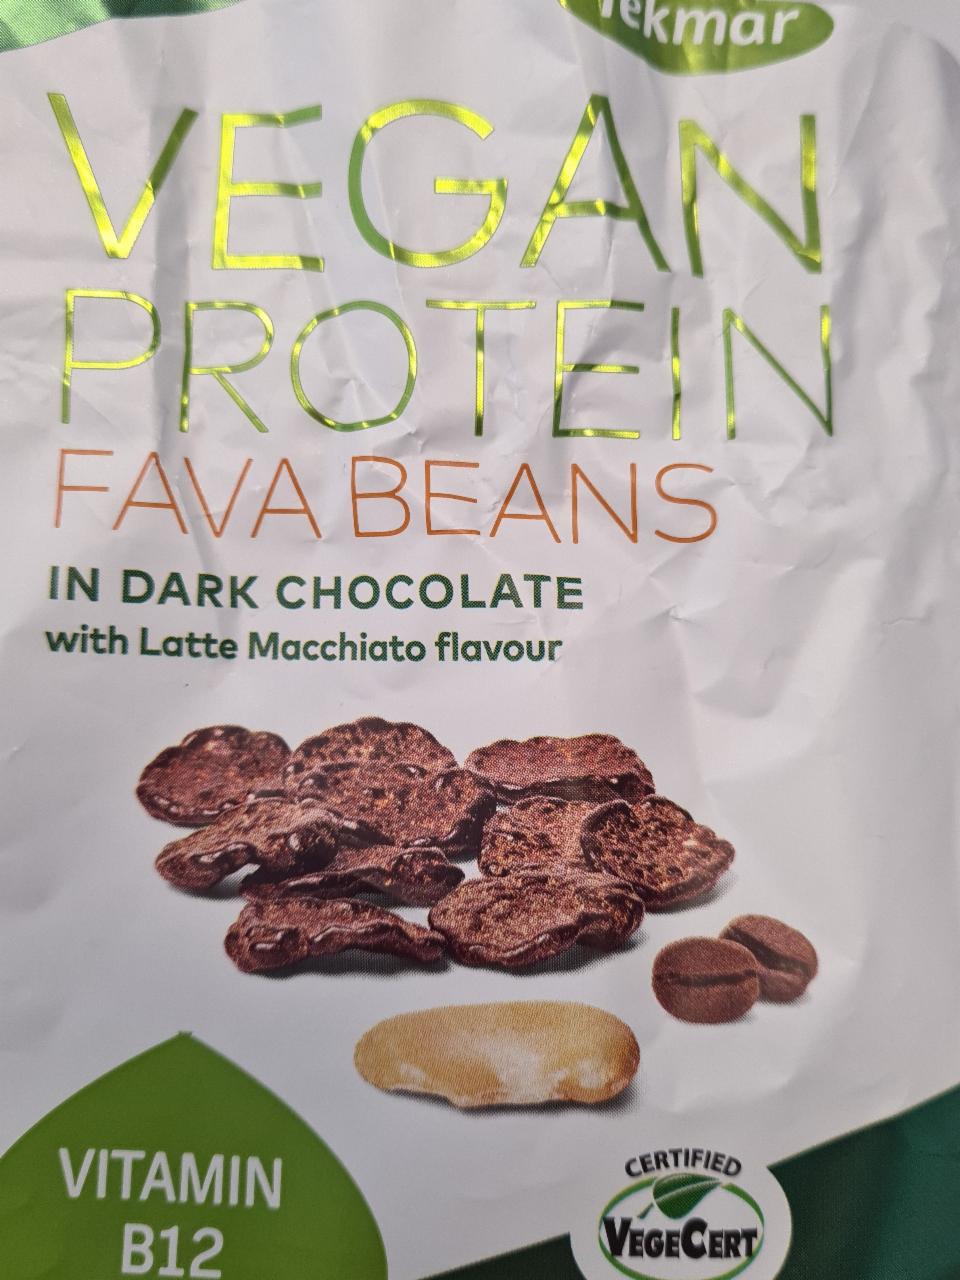 Fotografie - Vegan Protein Fava Beans in Dark chocolate with Latte Macchiato flavour Tekmar